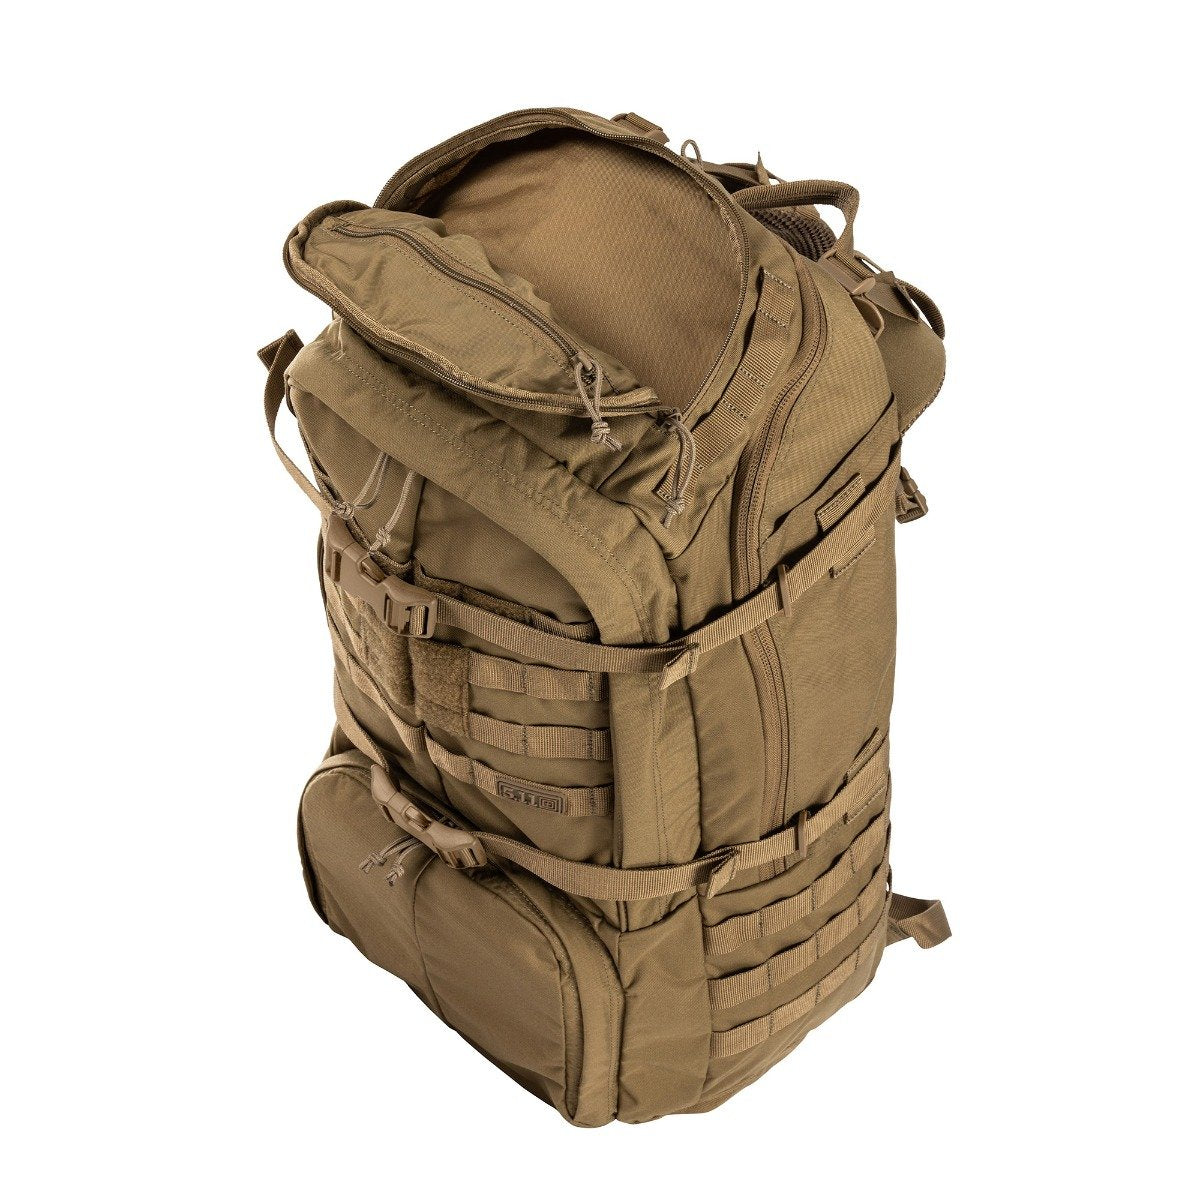 5.11 Tactical Rush100 60L Backpack Black Bags, Packs and Cases 5.11 Tactical Tactical Gear Supplier Tactical Distributors Australia